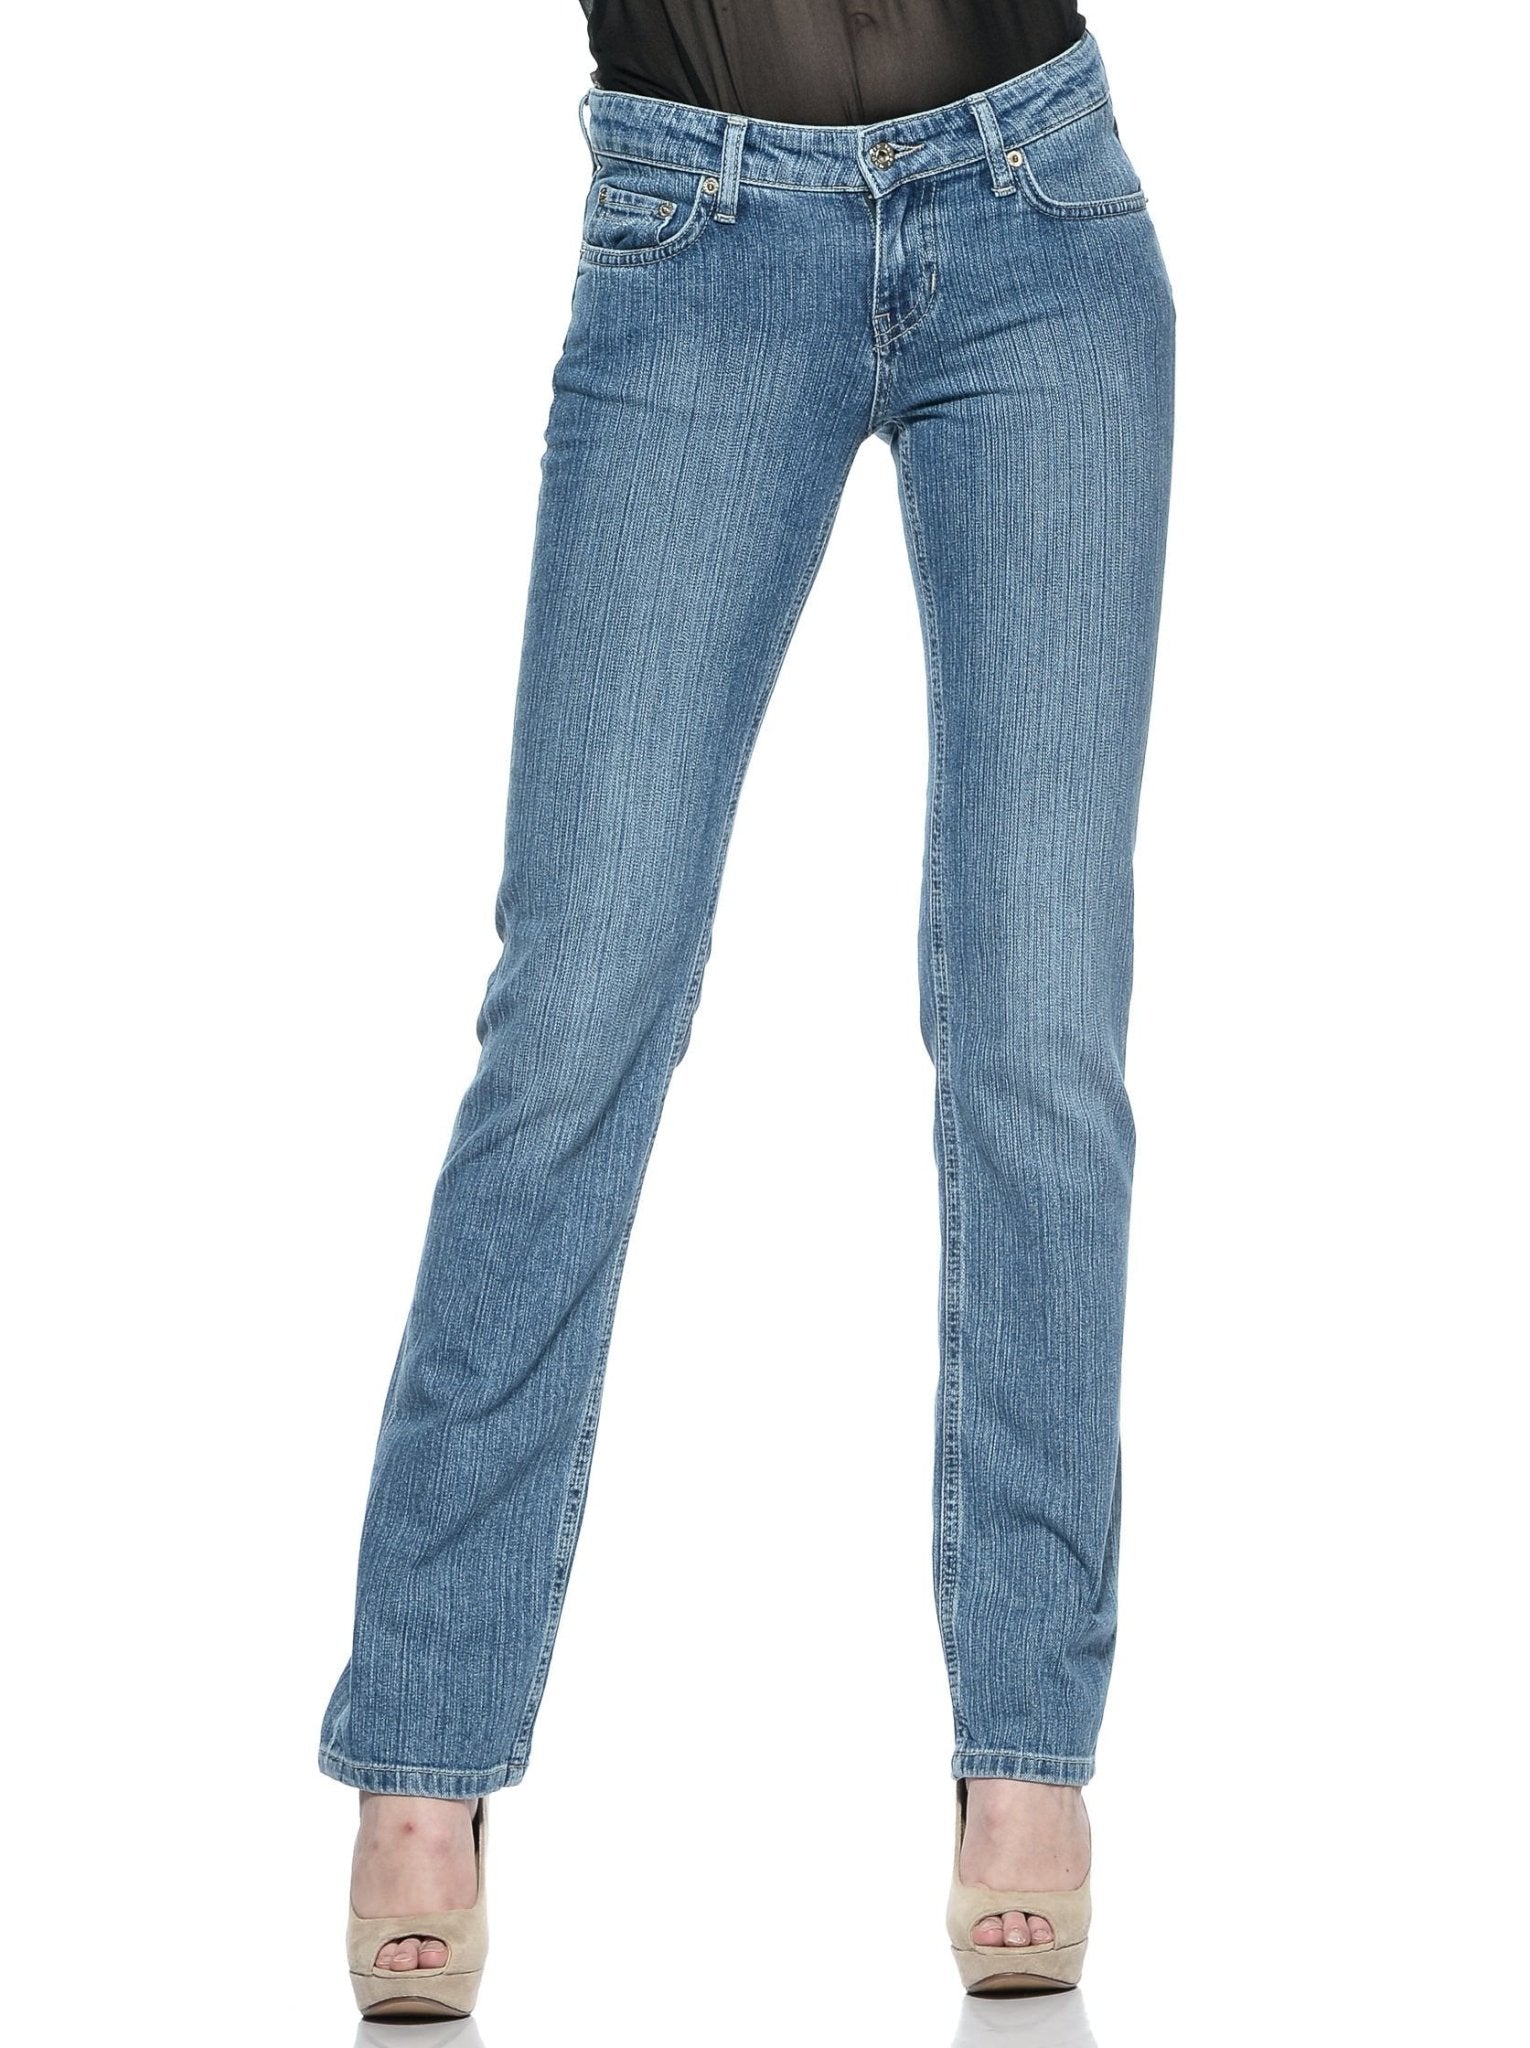 Ungaro Fever Light Blue Cotton Jeans & Pant - Fizigo